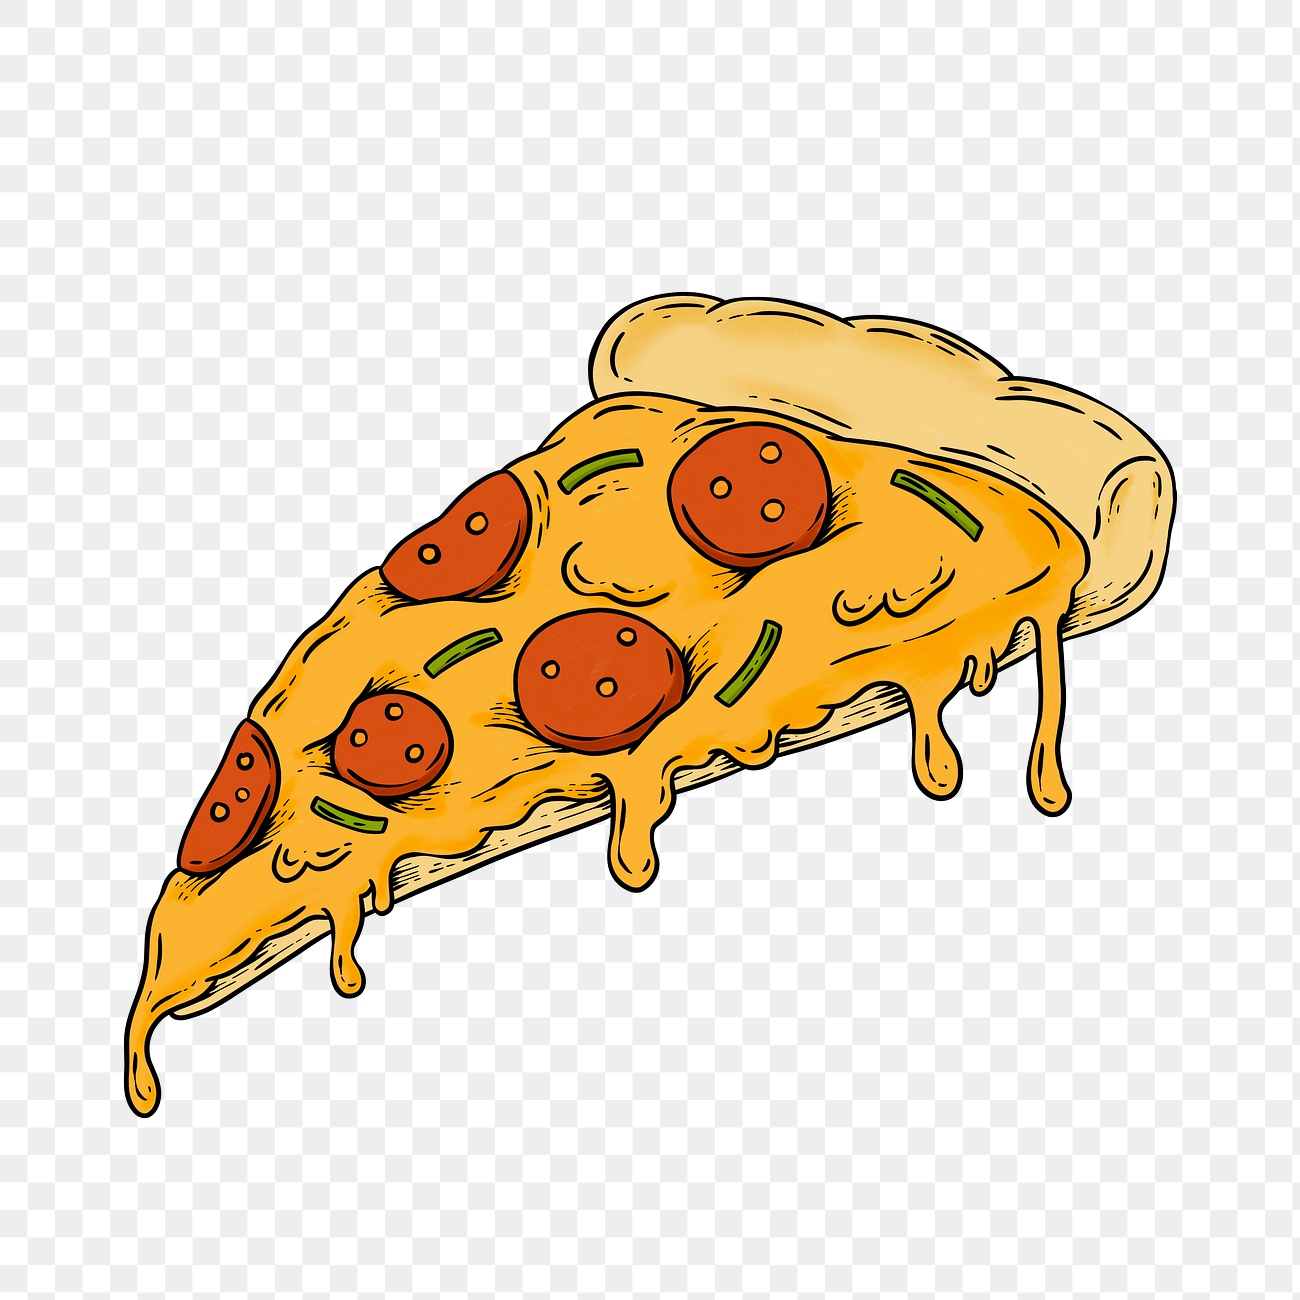 Cheesy pepperoni pizza slice sticker overlay design element